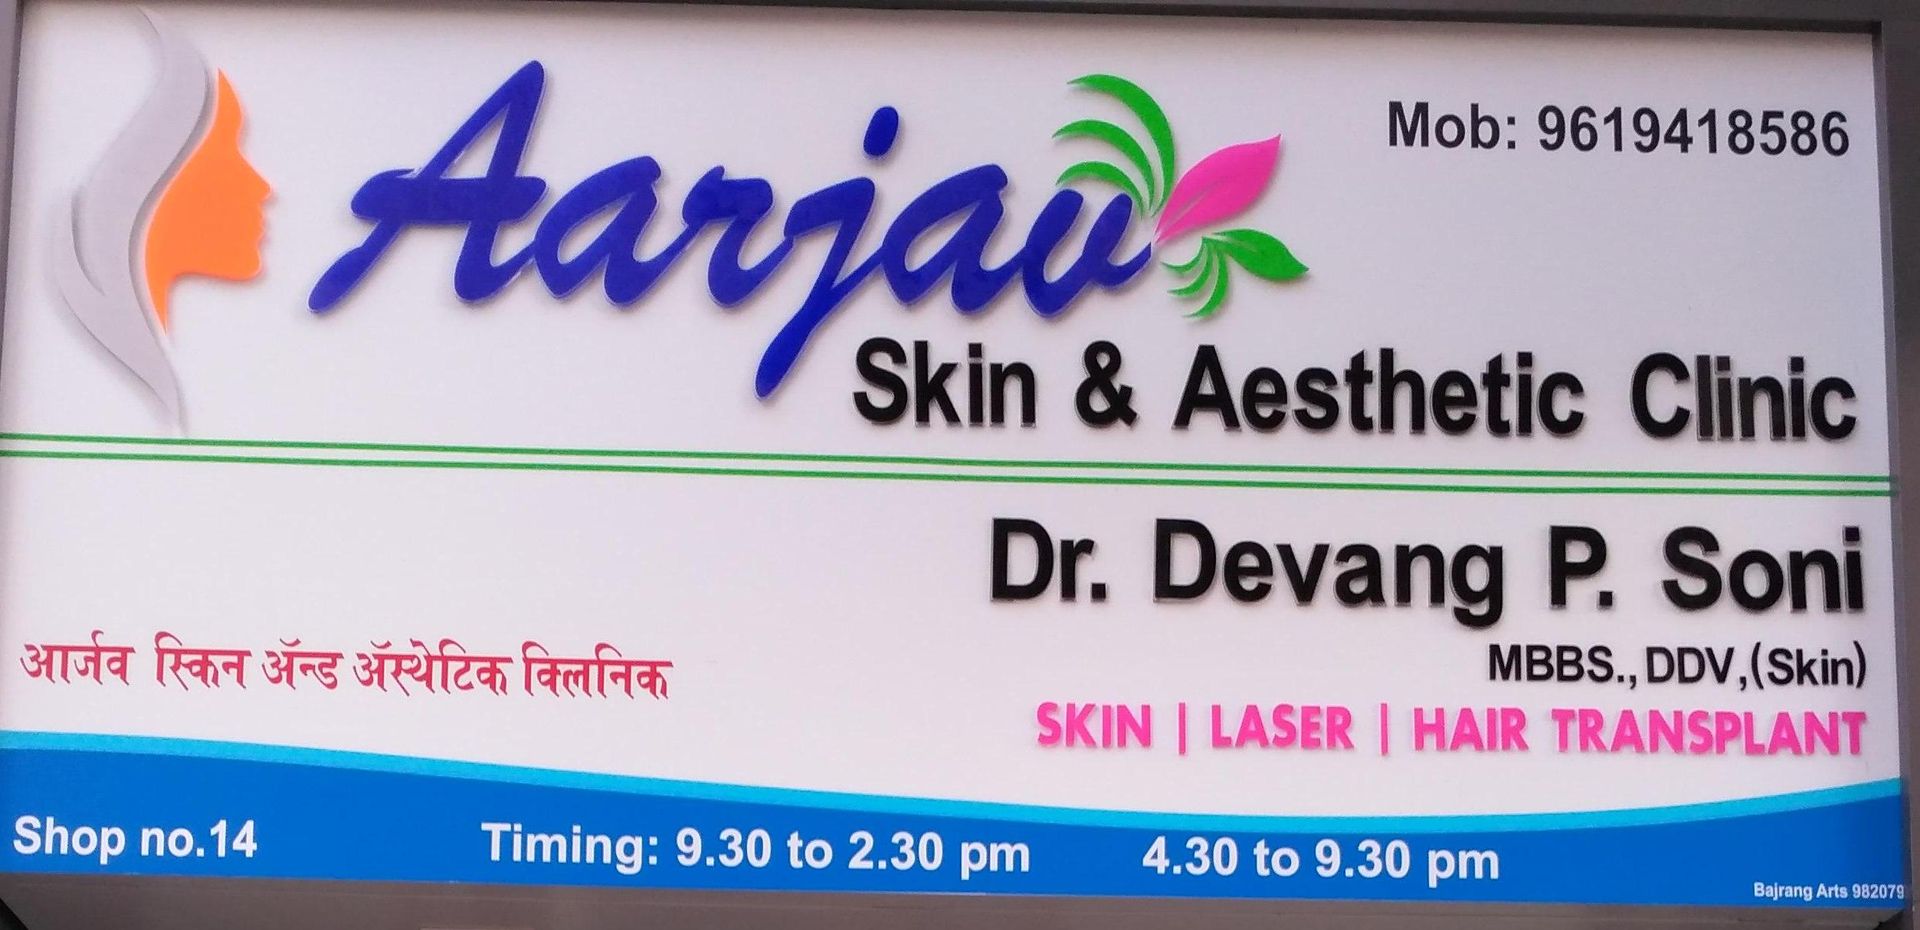 Aarjav Skin And Aesthetic Clinic's logo